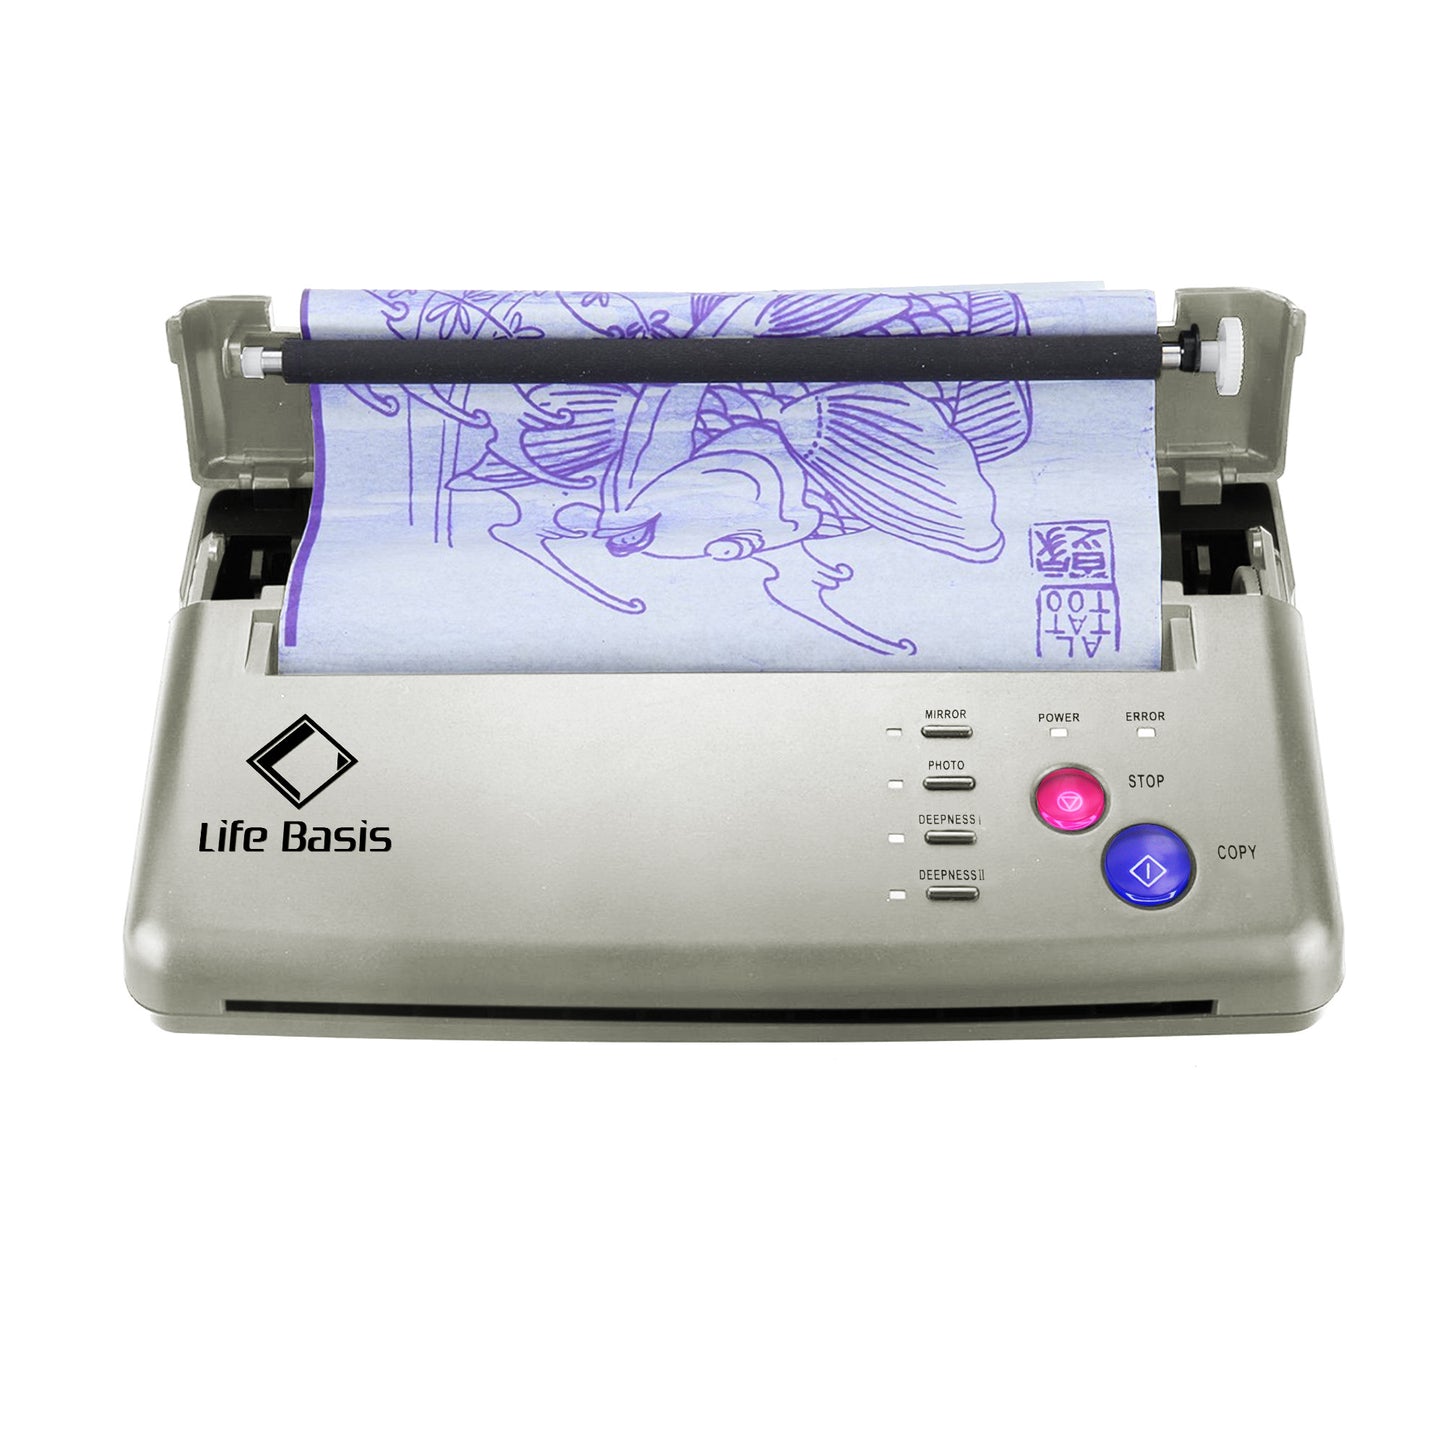 LifeBasis Tattoo Stencil Printer 